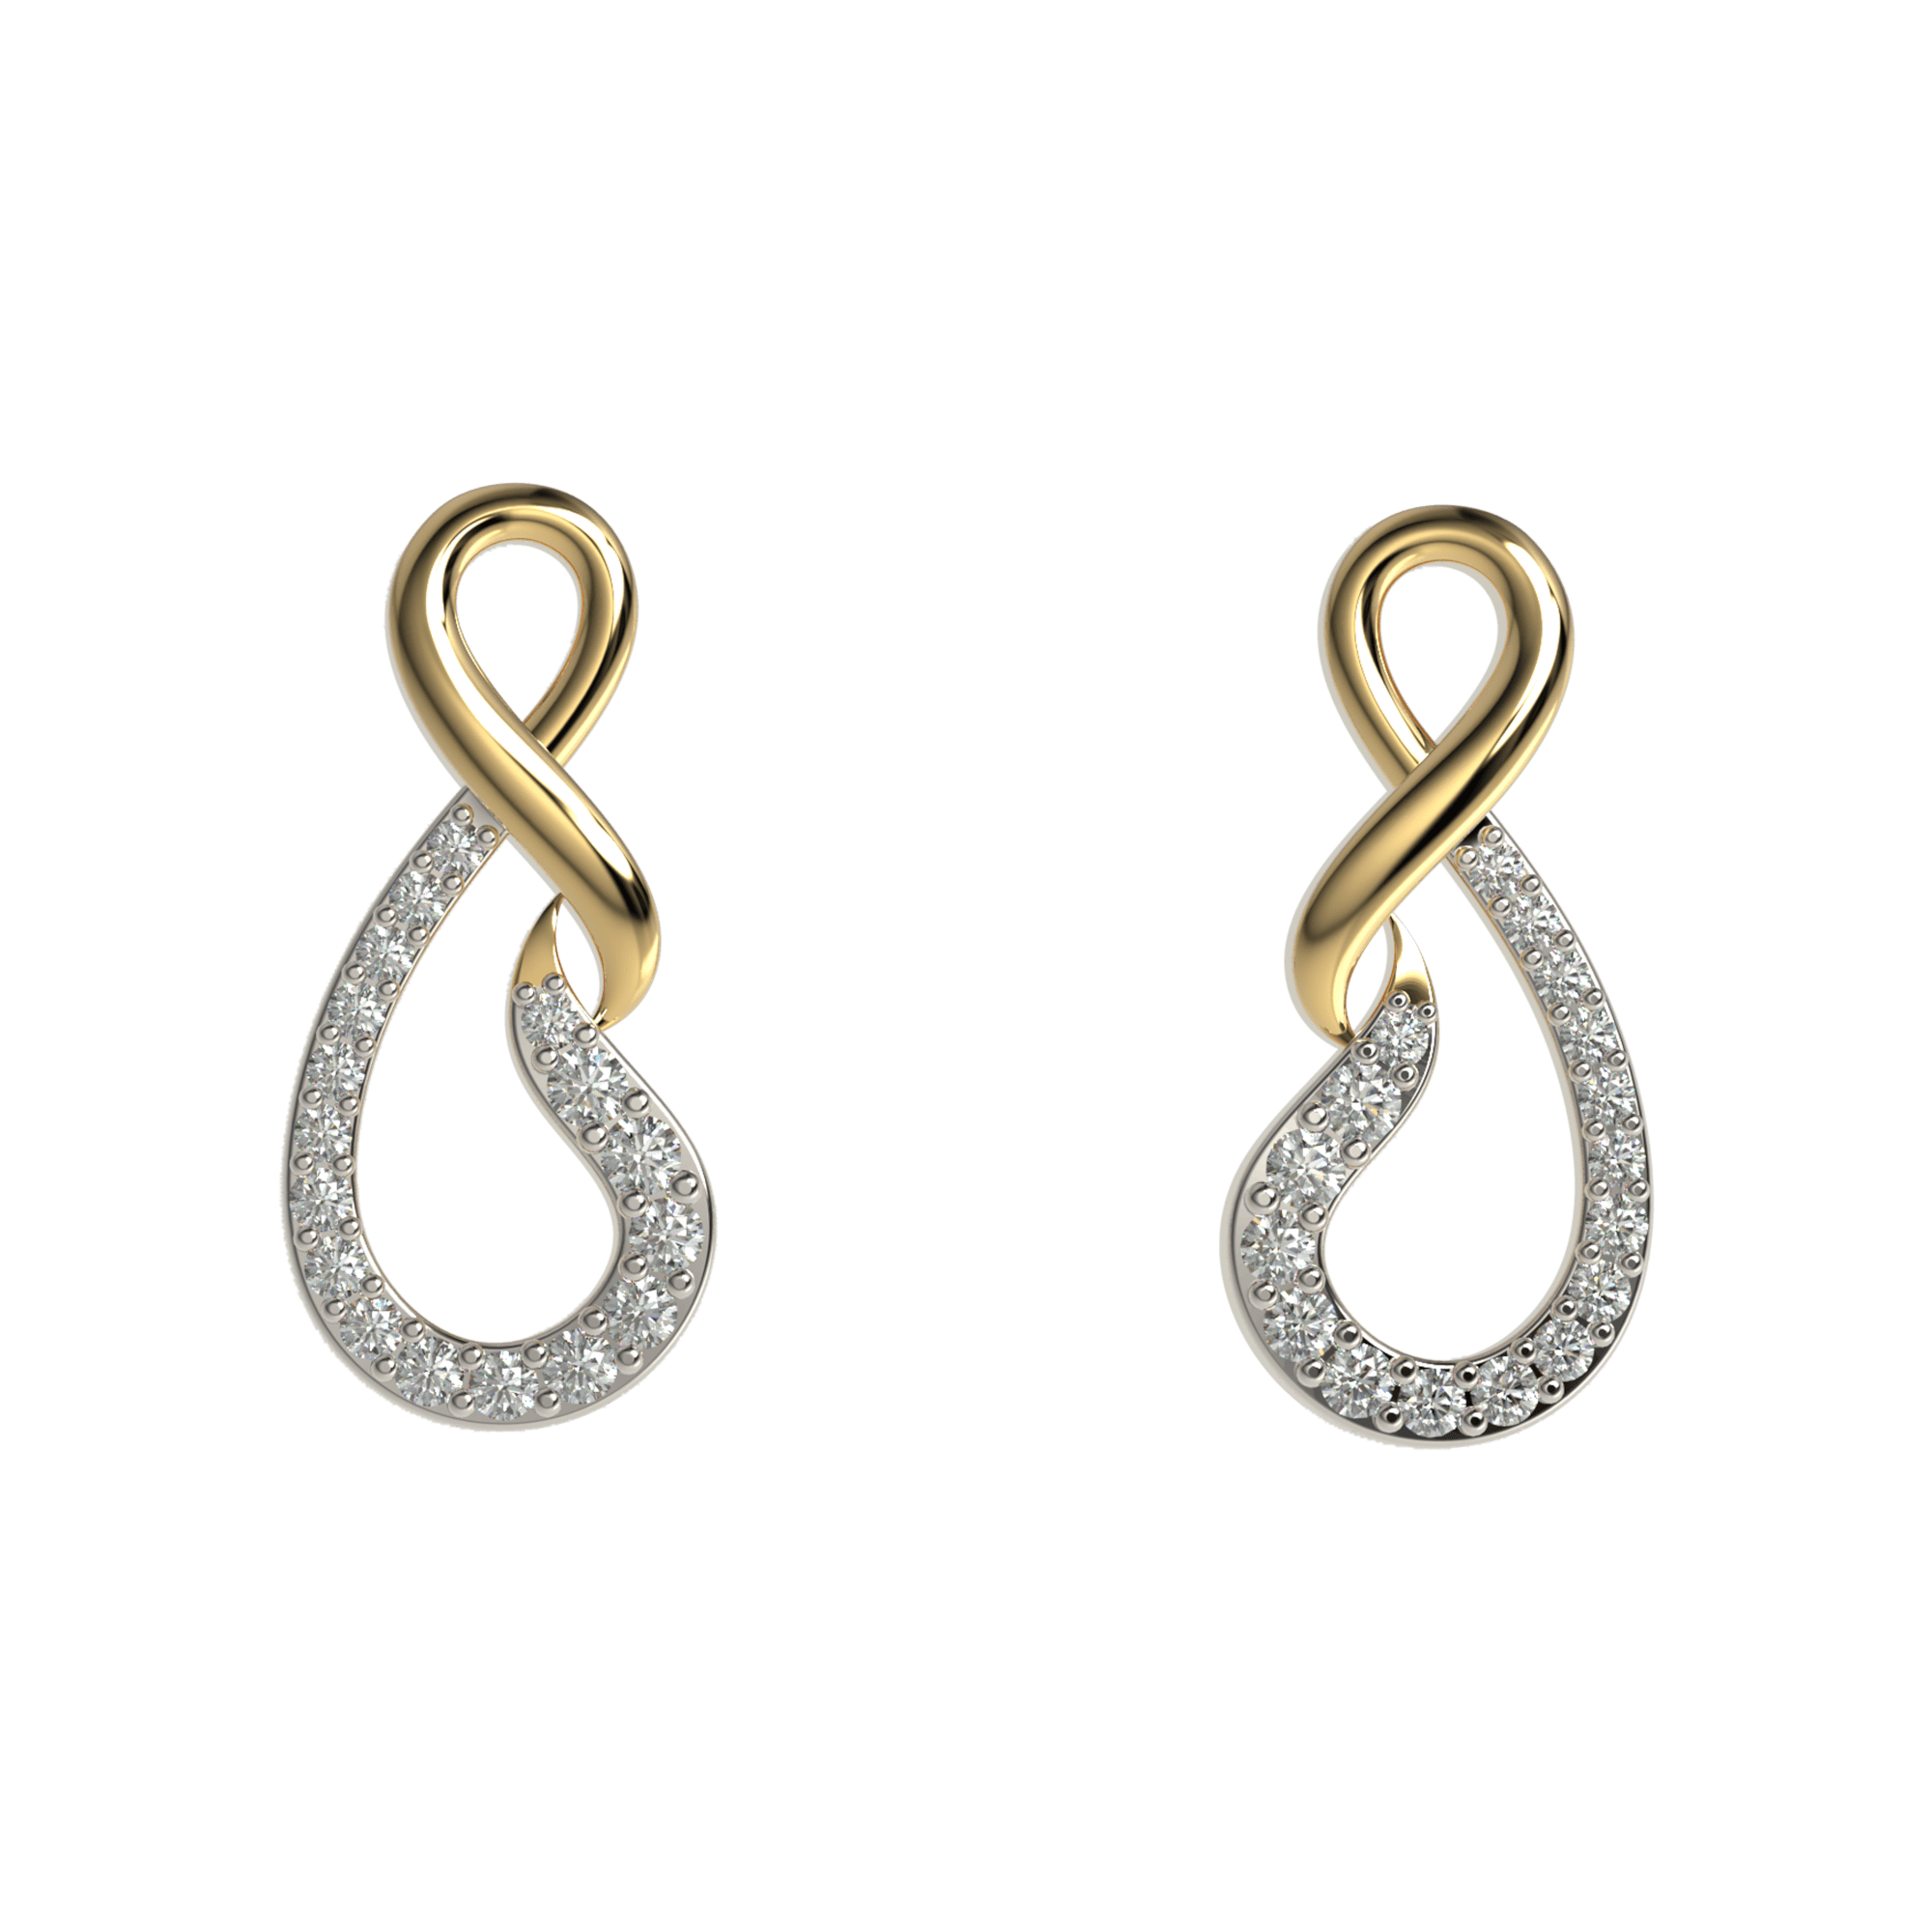 Small gold earrings | Plain stud earrings | Star earrings gold | DEMI+CO  earrings - DEMI+CO Jewellery